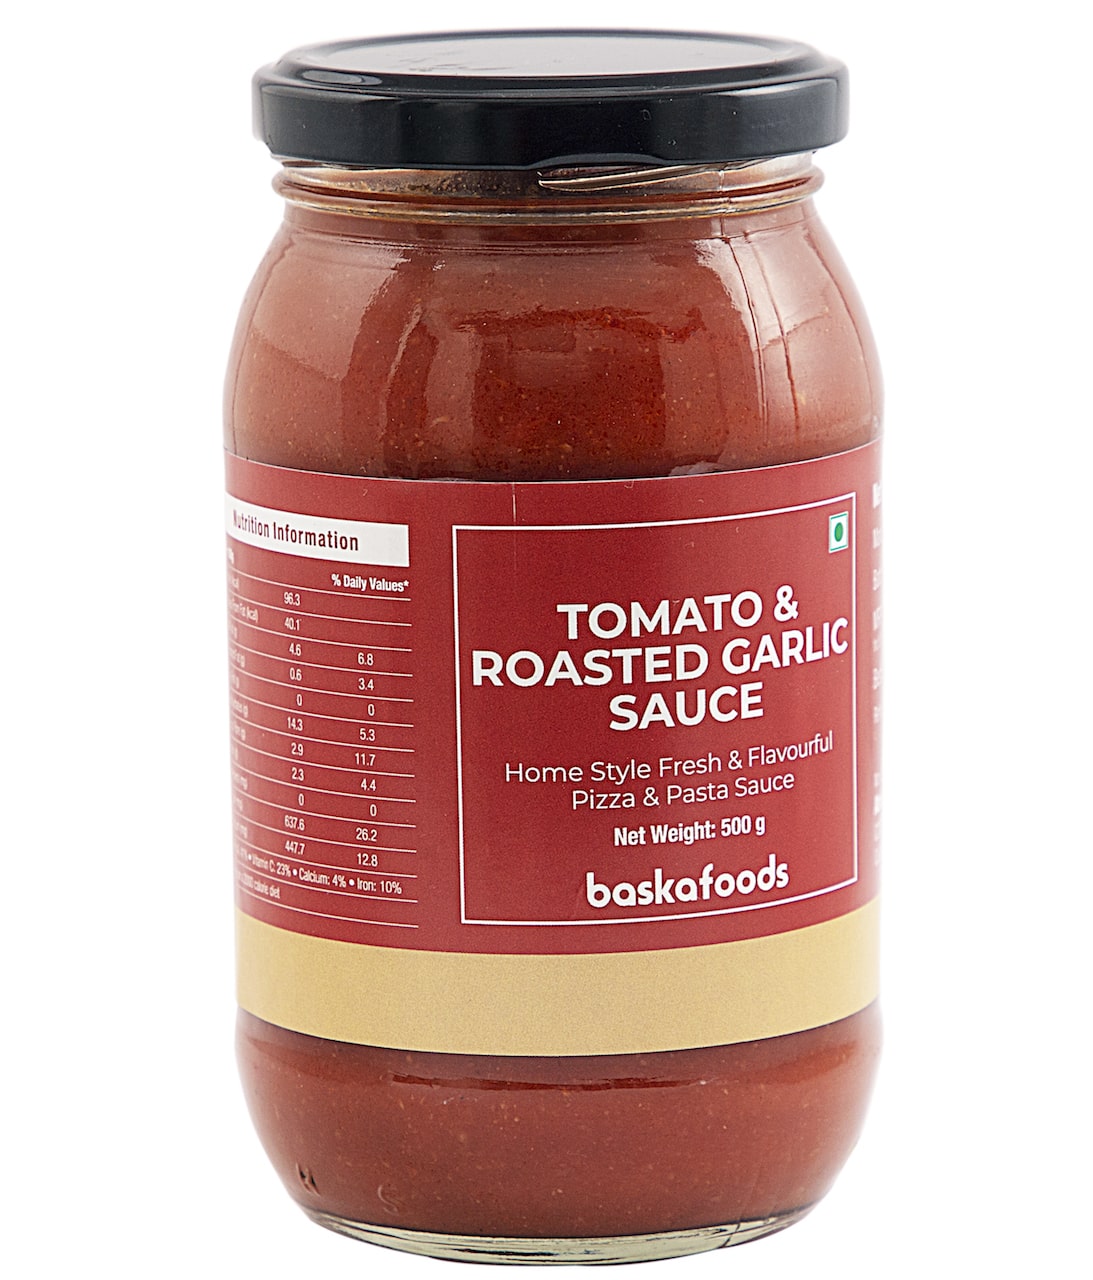 Tomato & Roasted Garlic Sauce